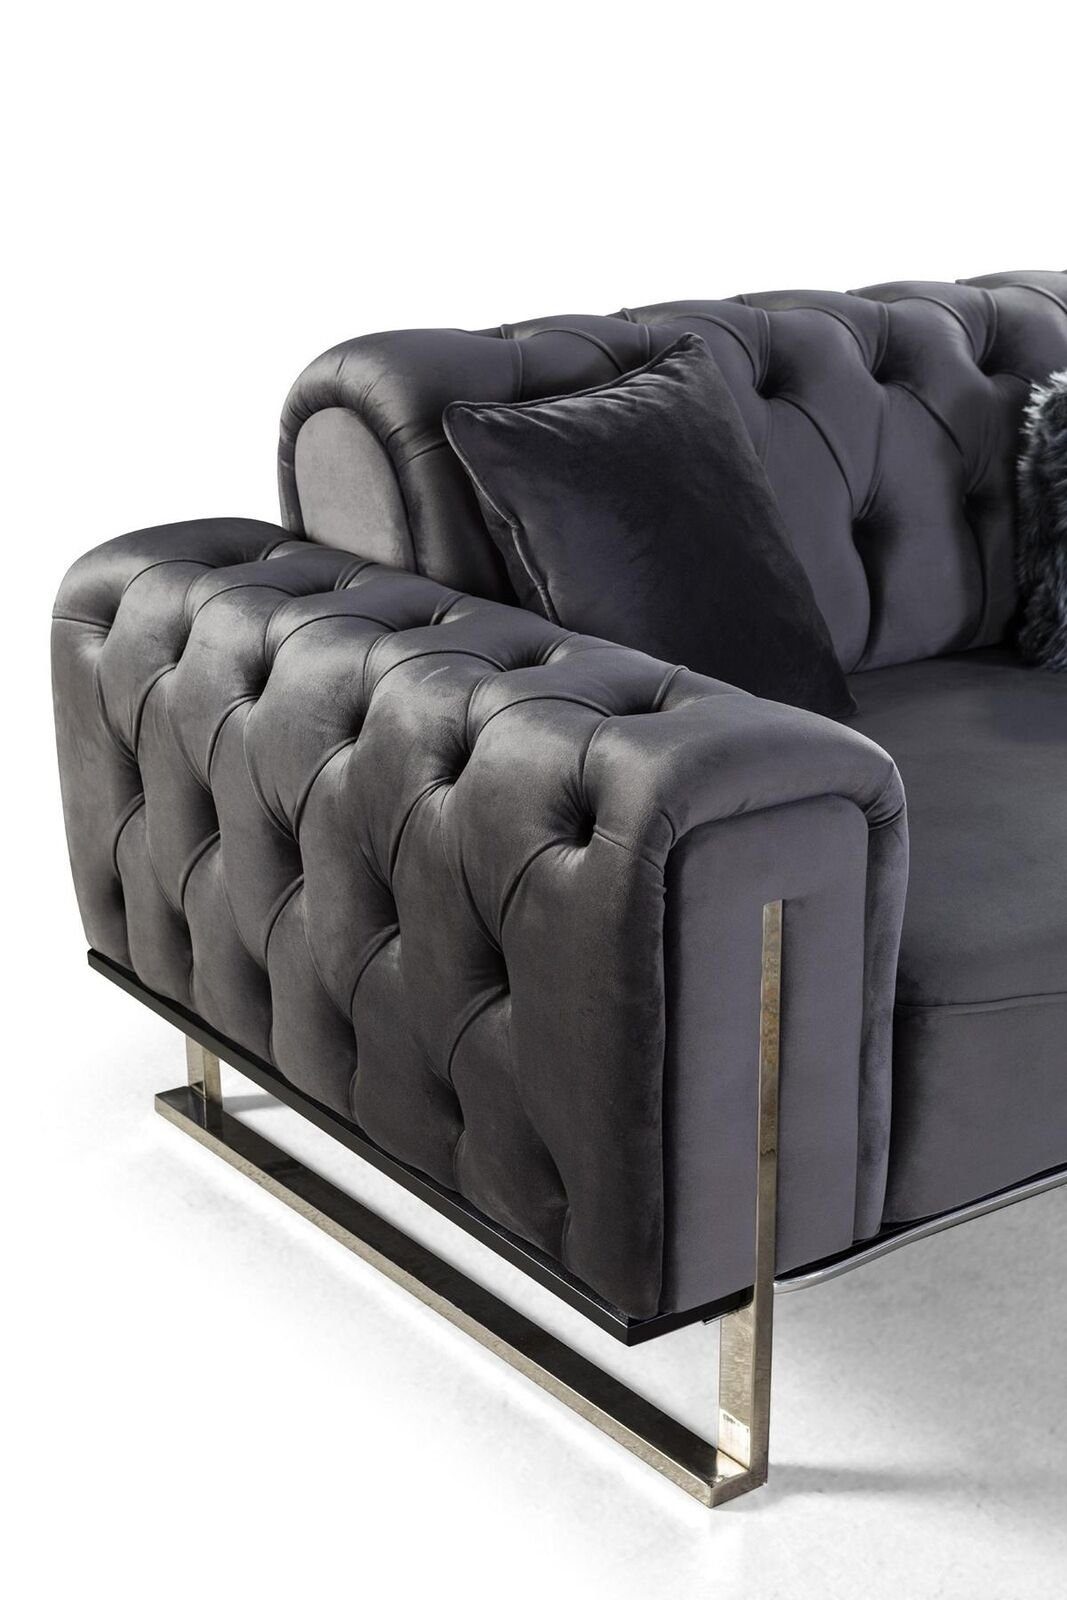 JVmoebel 3-Sitzer Chesterfield Sofa Sitz Textil Polster Made Plätzer Sofa Grau Teile, in Couchen, 3 1 Europa